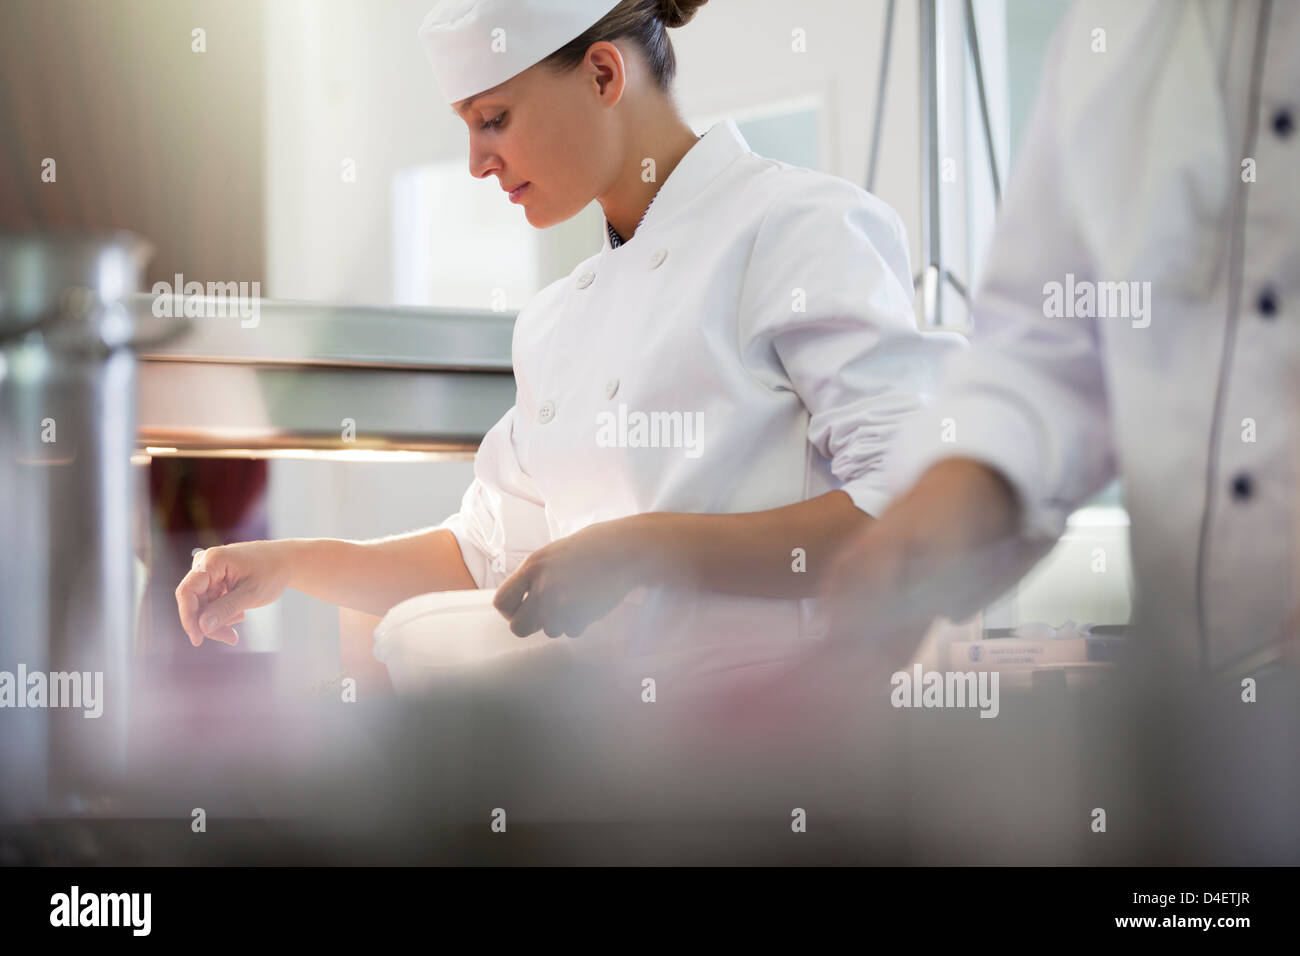 Chef cooking in restaurant kitchen Stock Photo